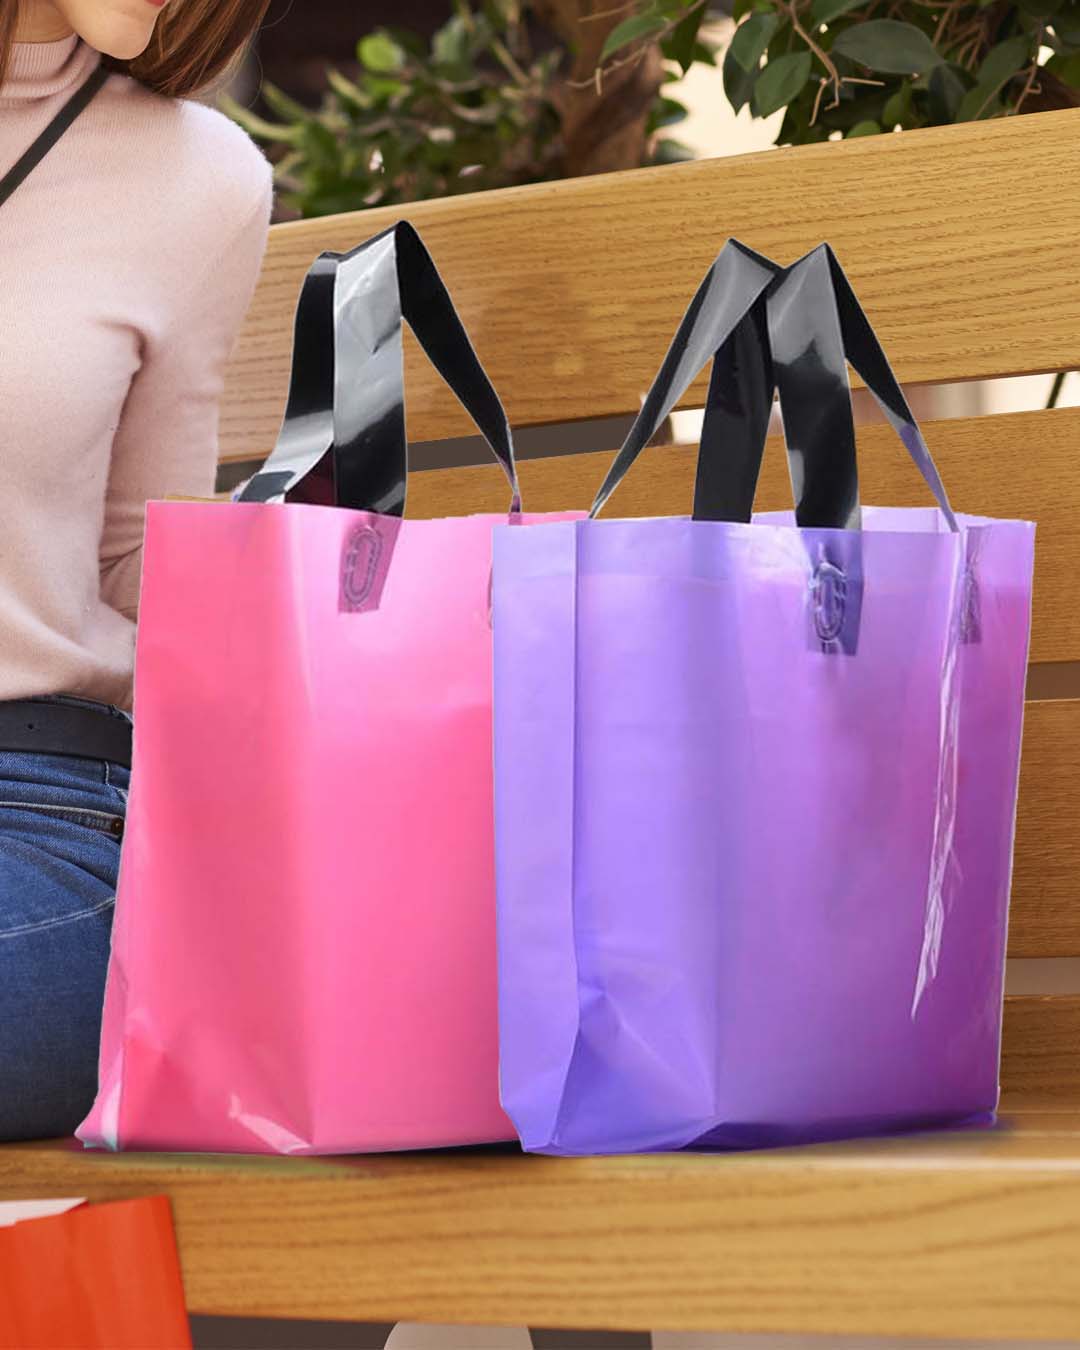 Plastic Boutique Shopping Bags 35x25cm 120mic